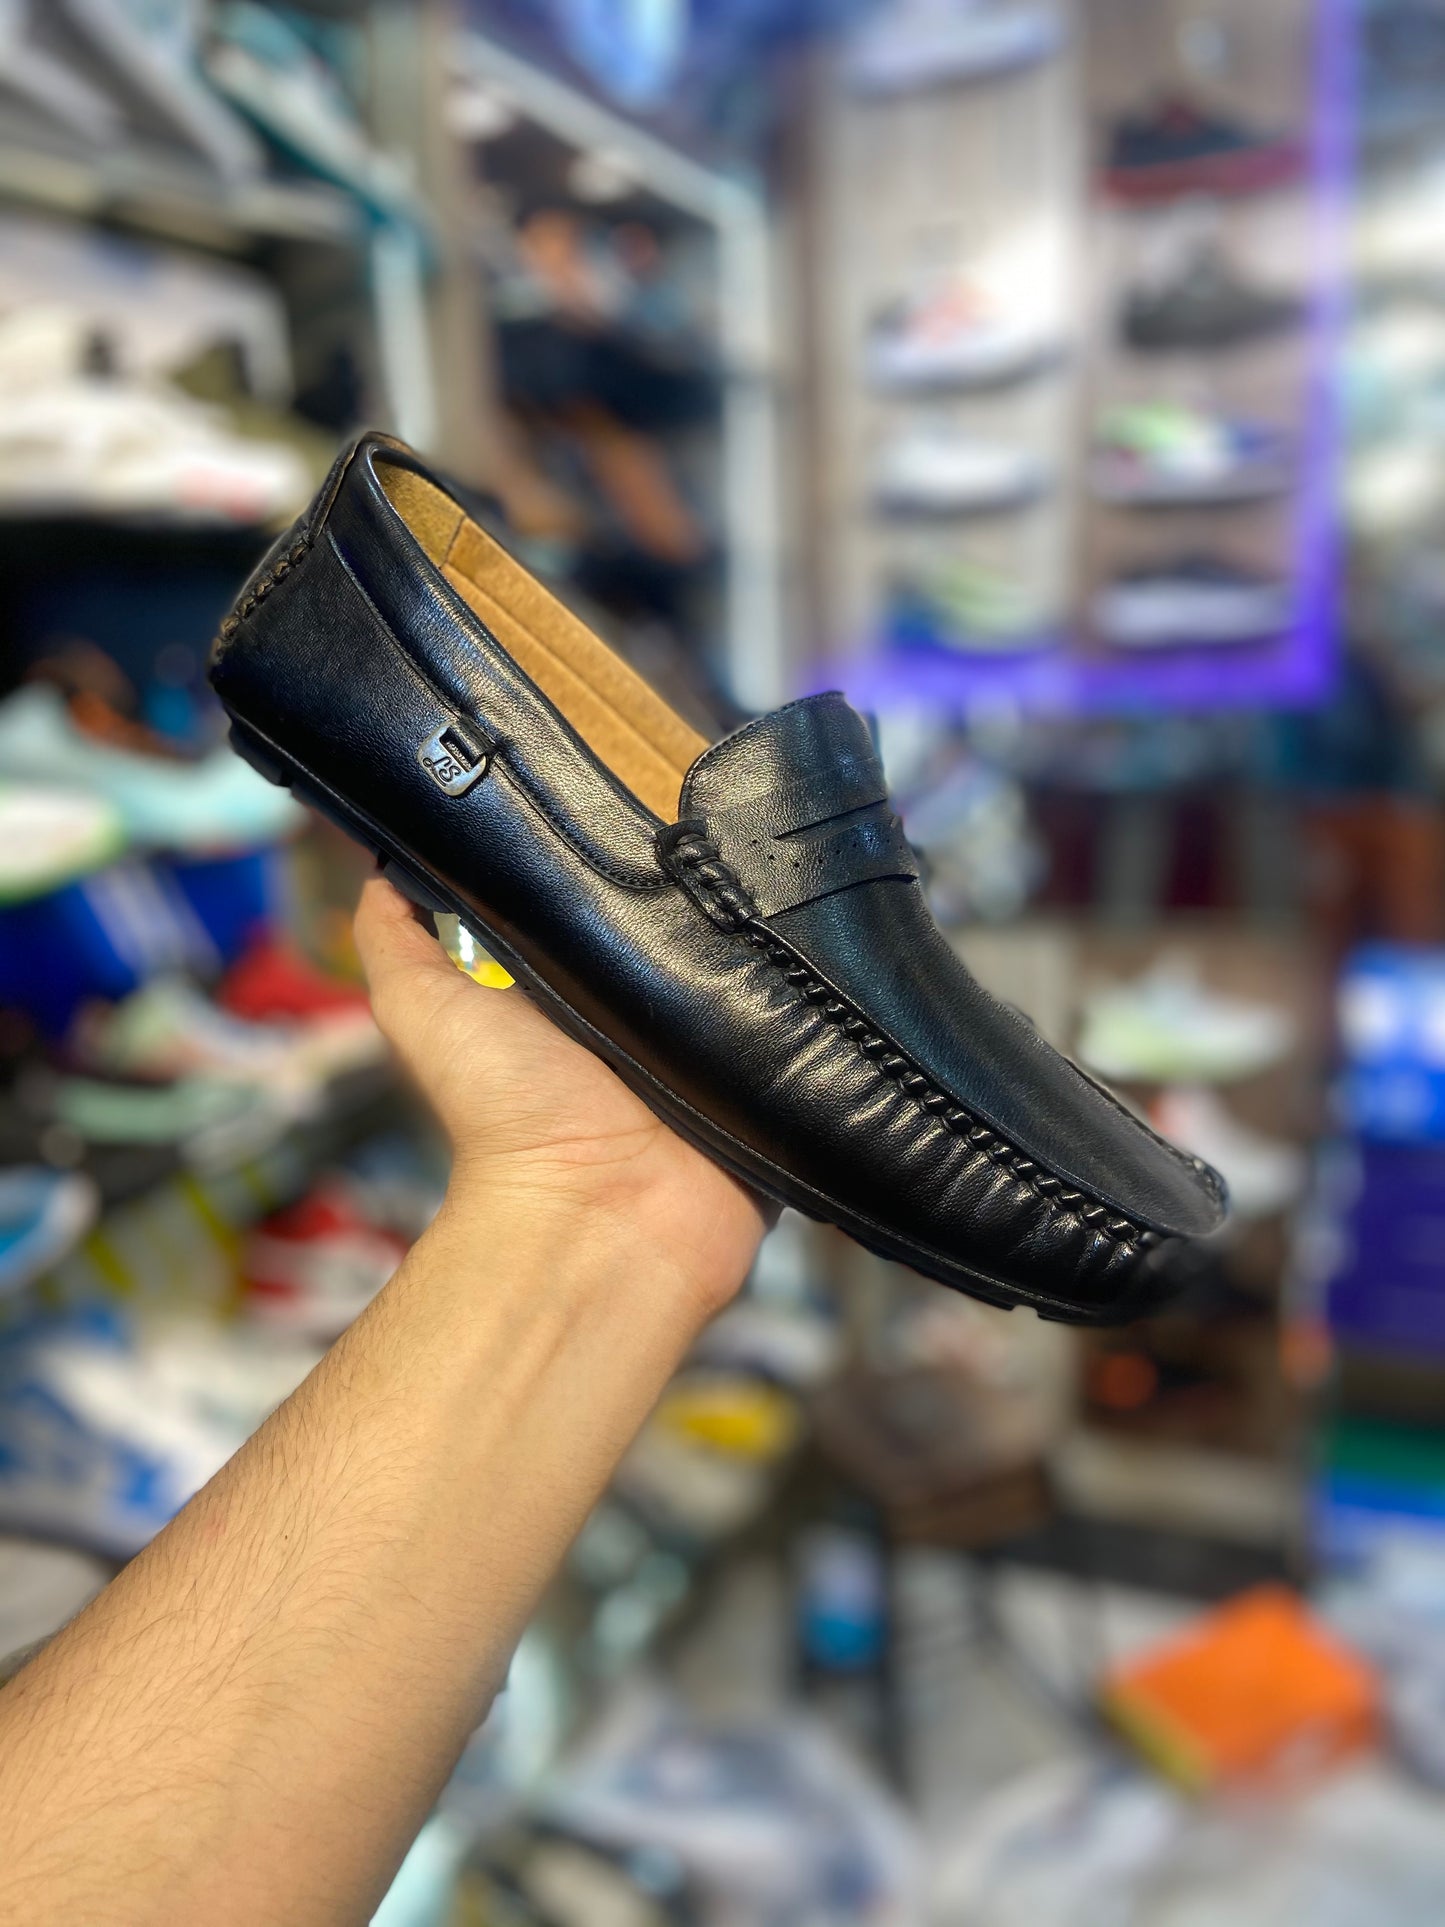 Black Look Style Buckle Loafers Formal Shoes For Men Model Number 6236 (Black)